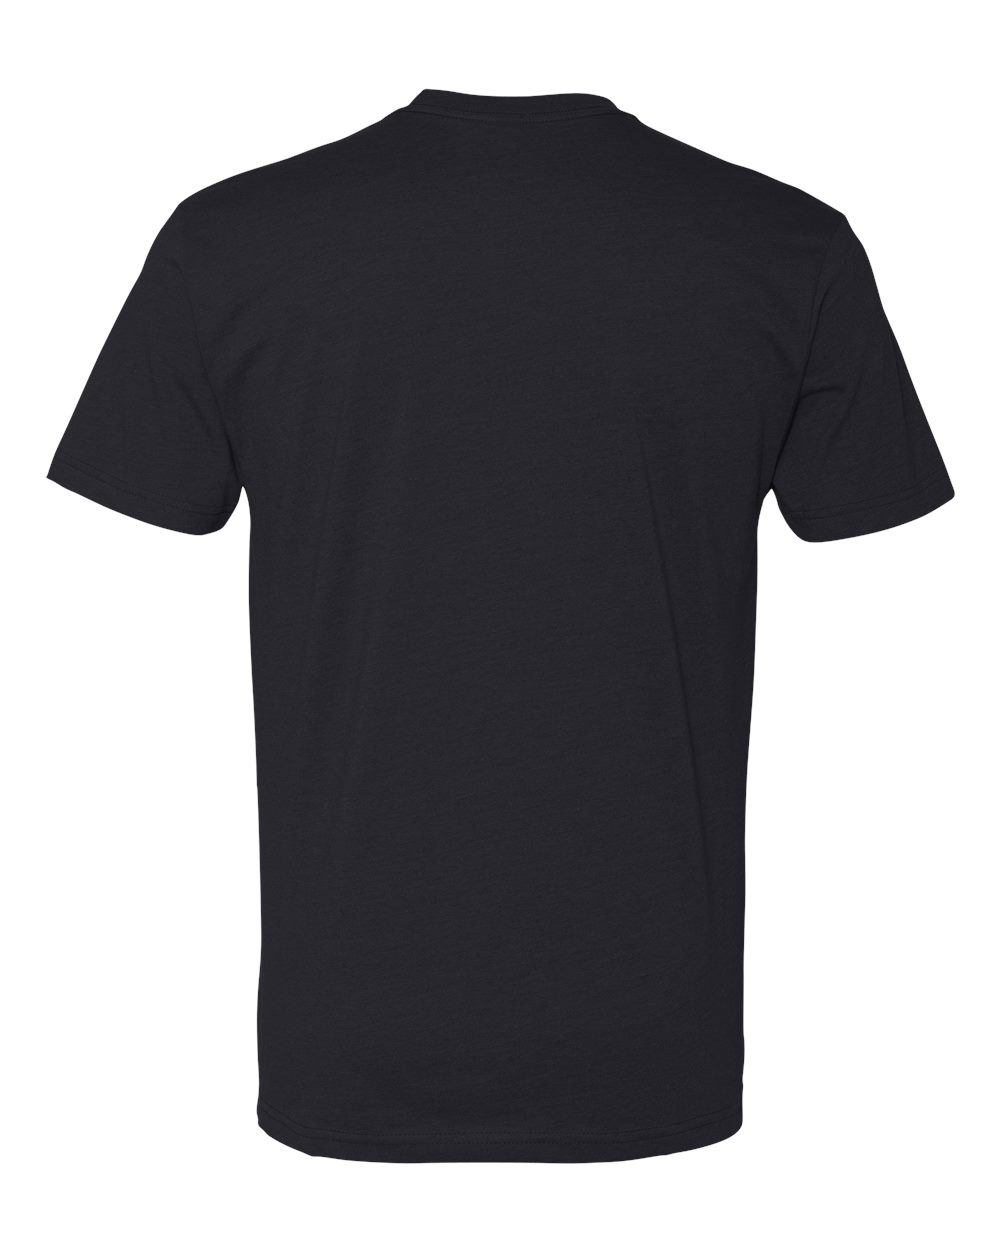 Iowa Herky Football Black T Shirt Back